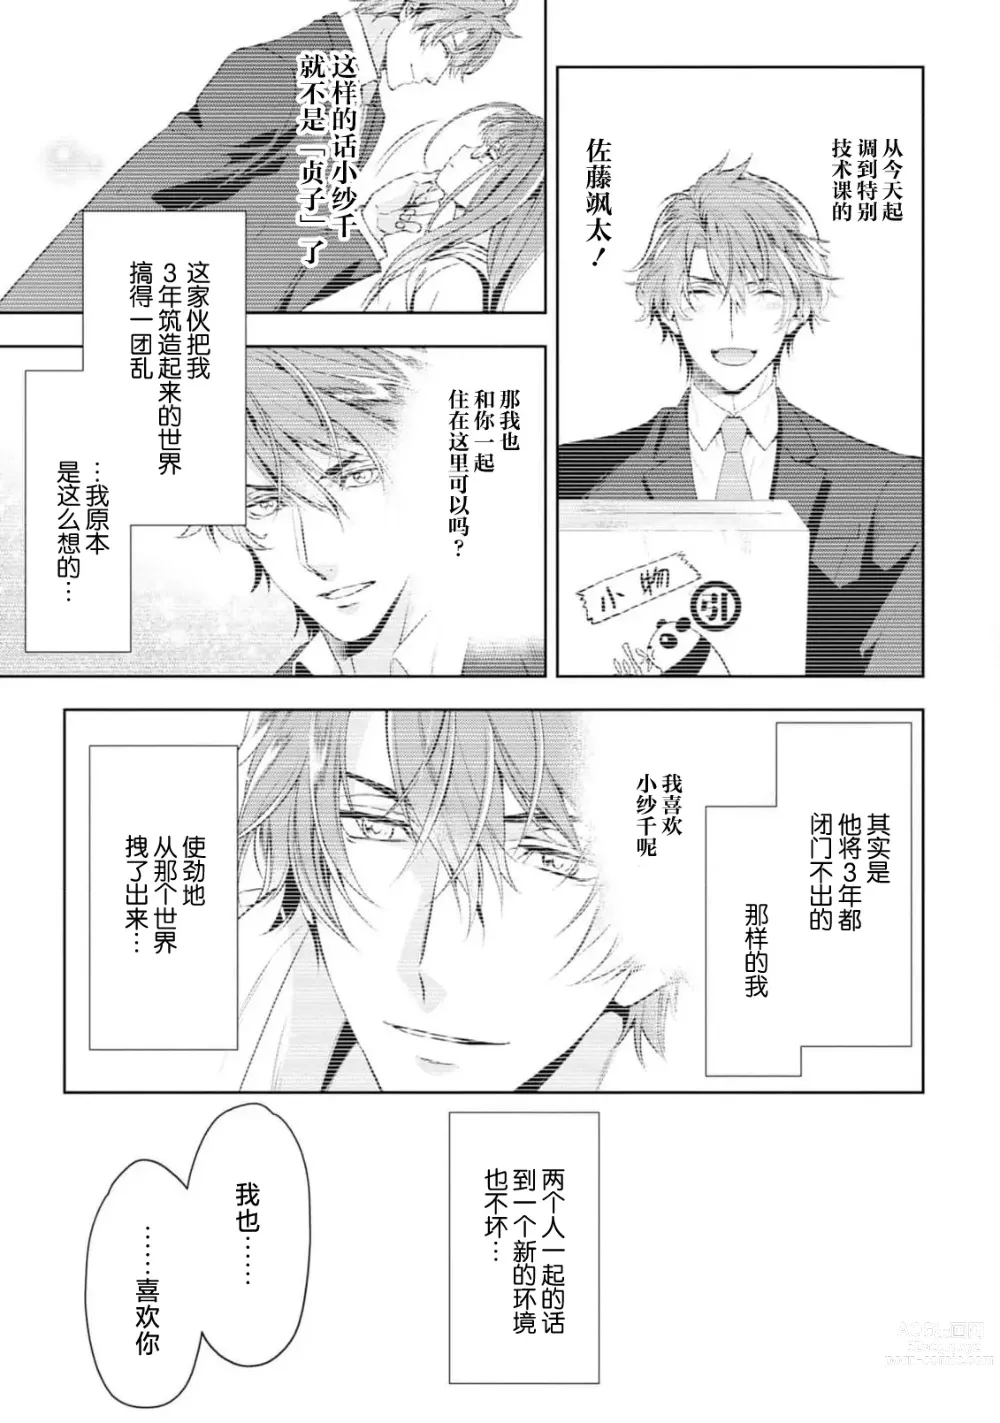 Page 138 of manga 消极小姐和乐观先生~触摸上司的那个并进行反击!?~ 1-5 + Extra